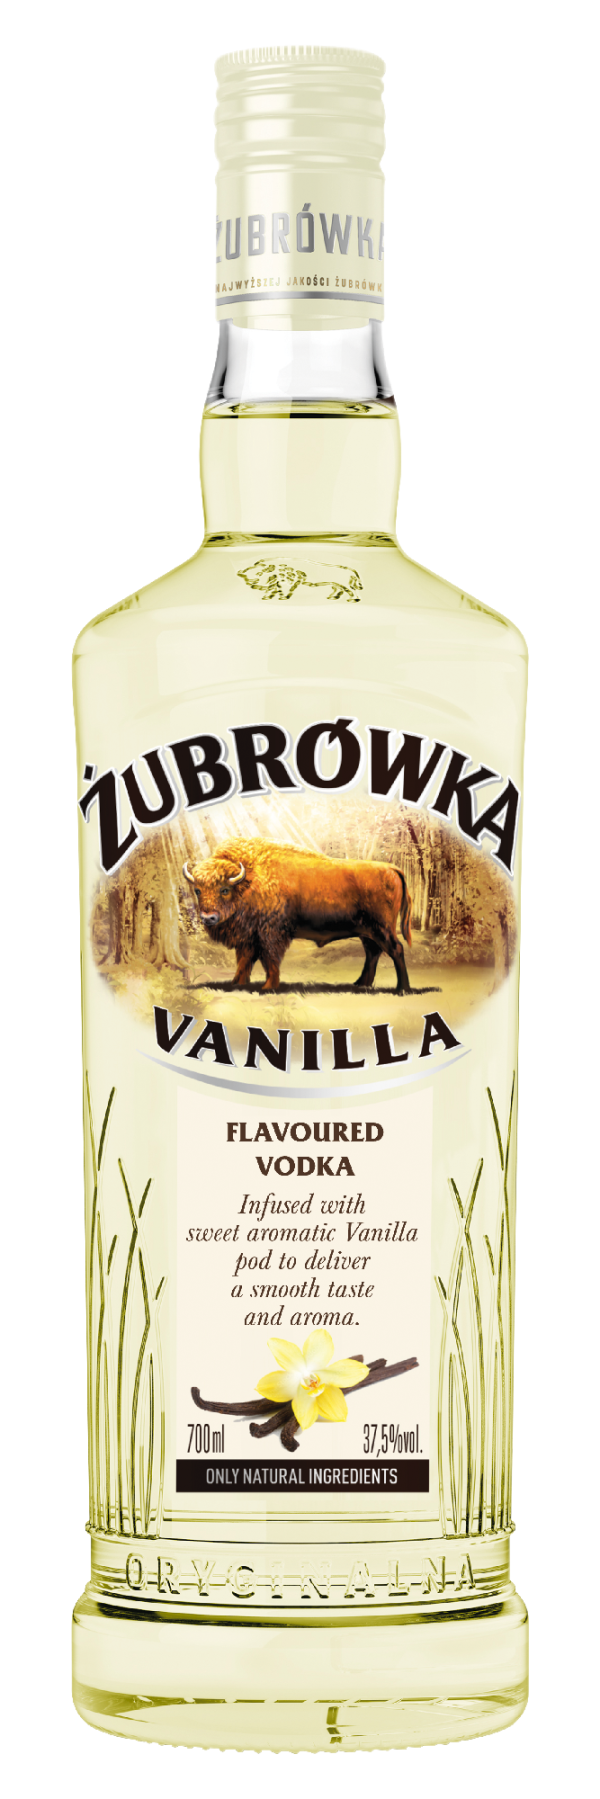 Zubrowka Vanilla